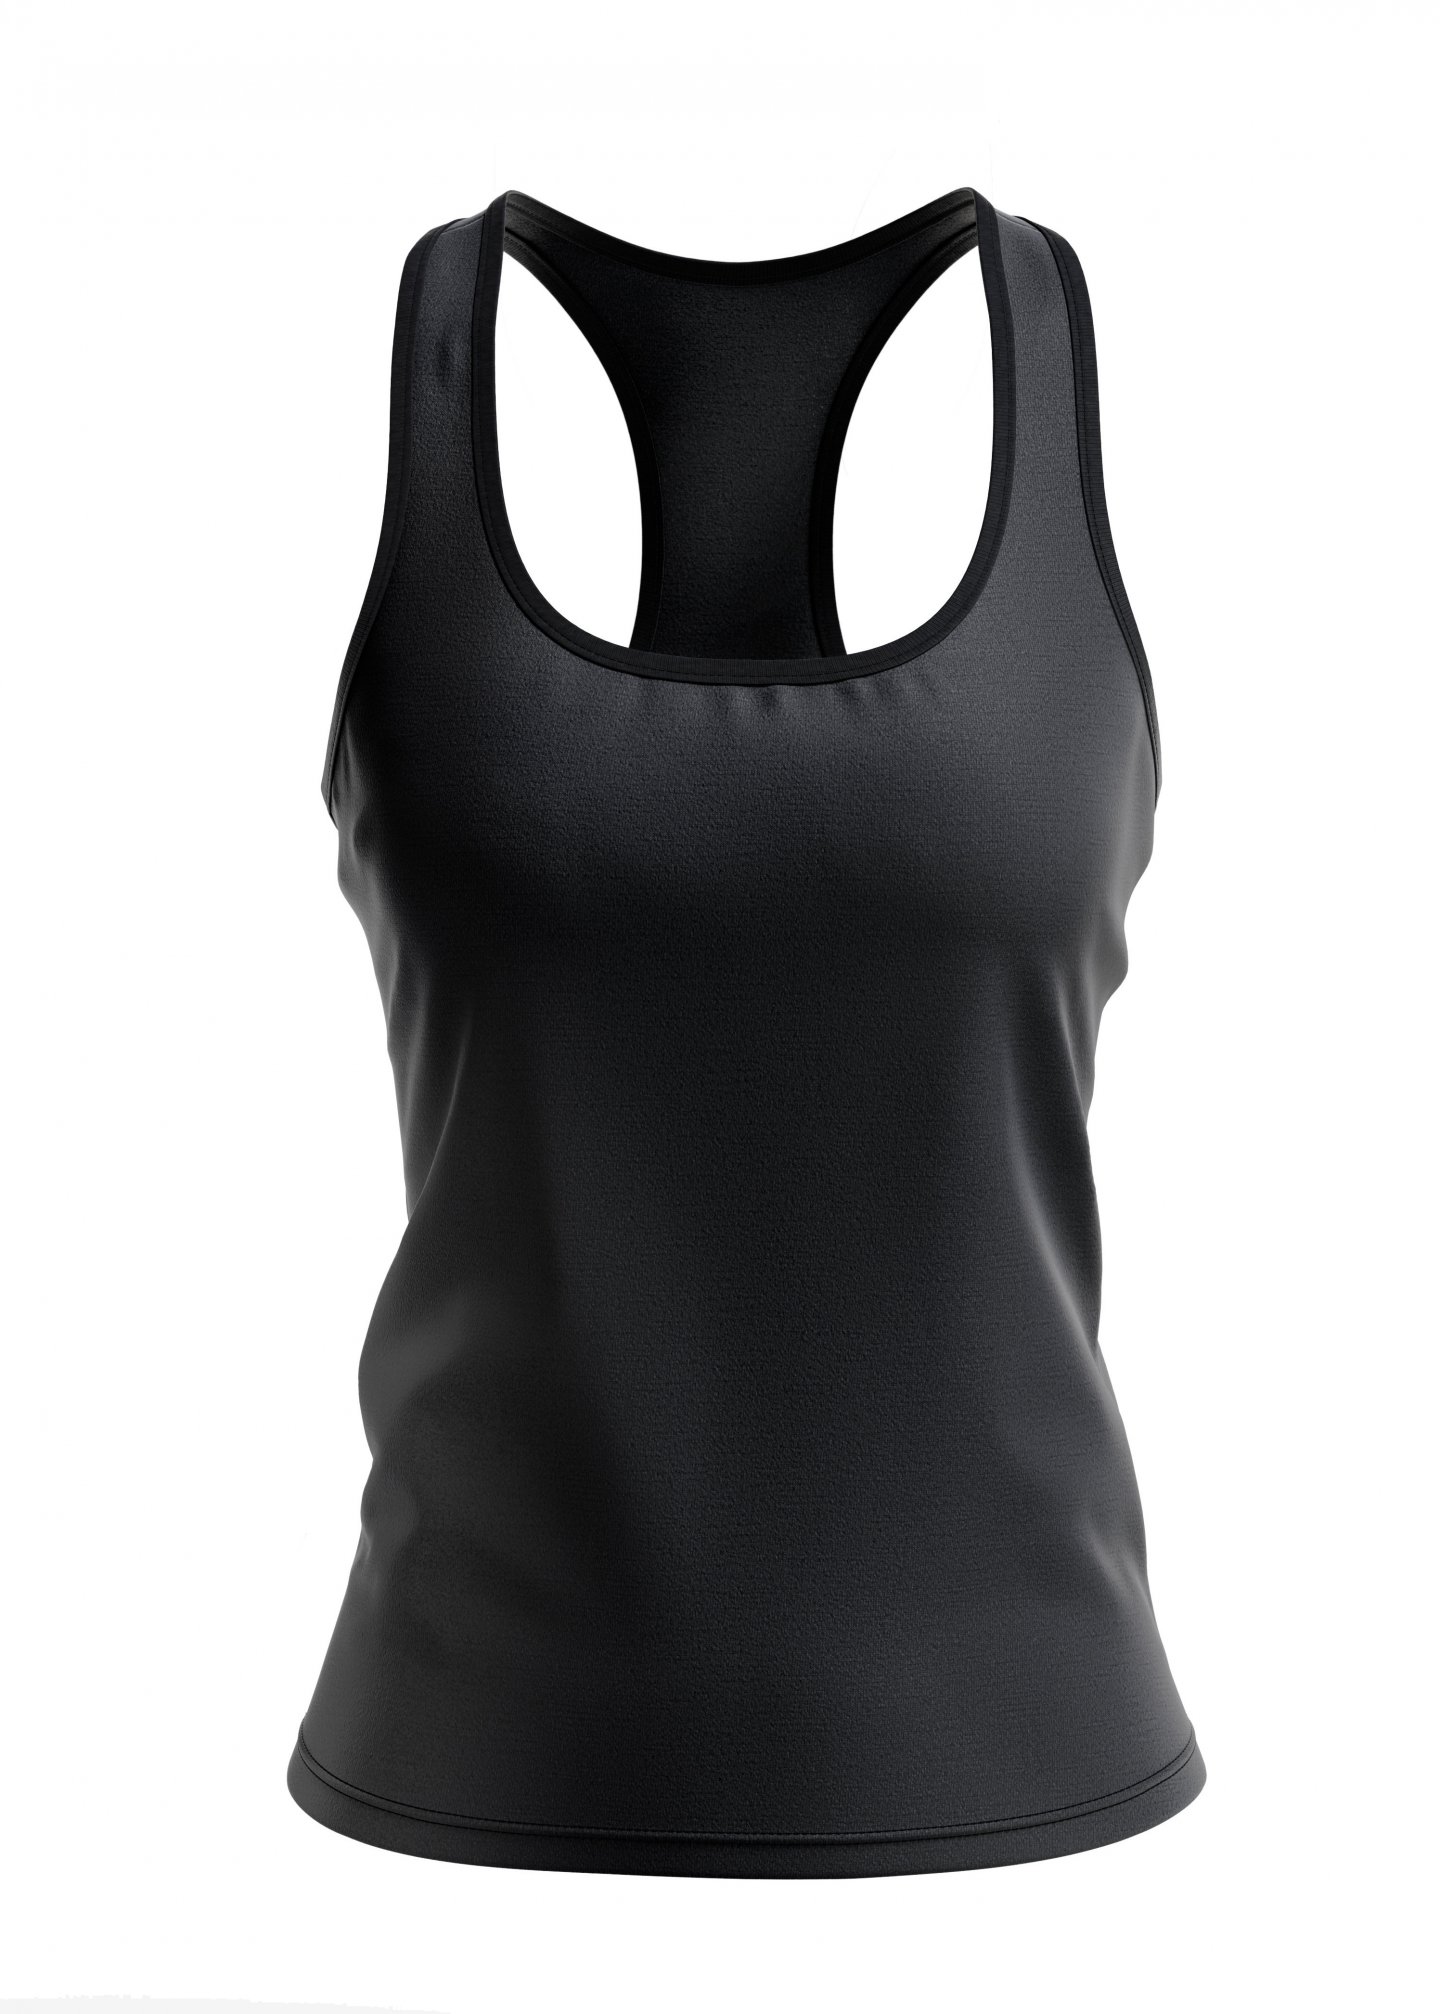 Black Yoga Tank Tops & Sleeveless Shirts.